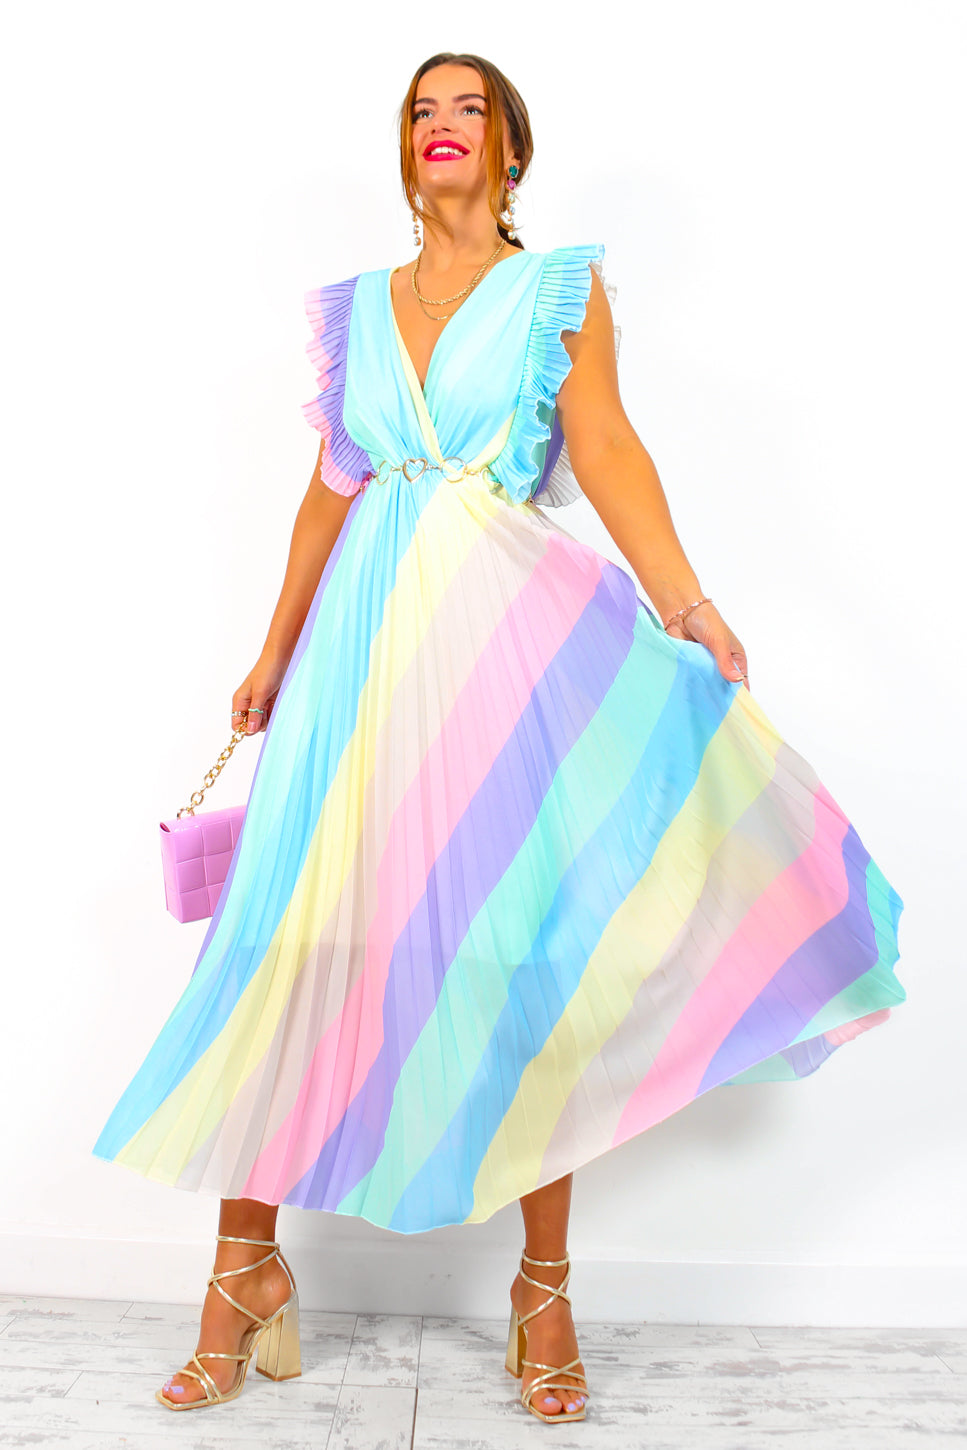 Pastel Rainbow dress | eBay